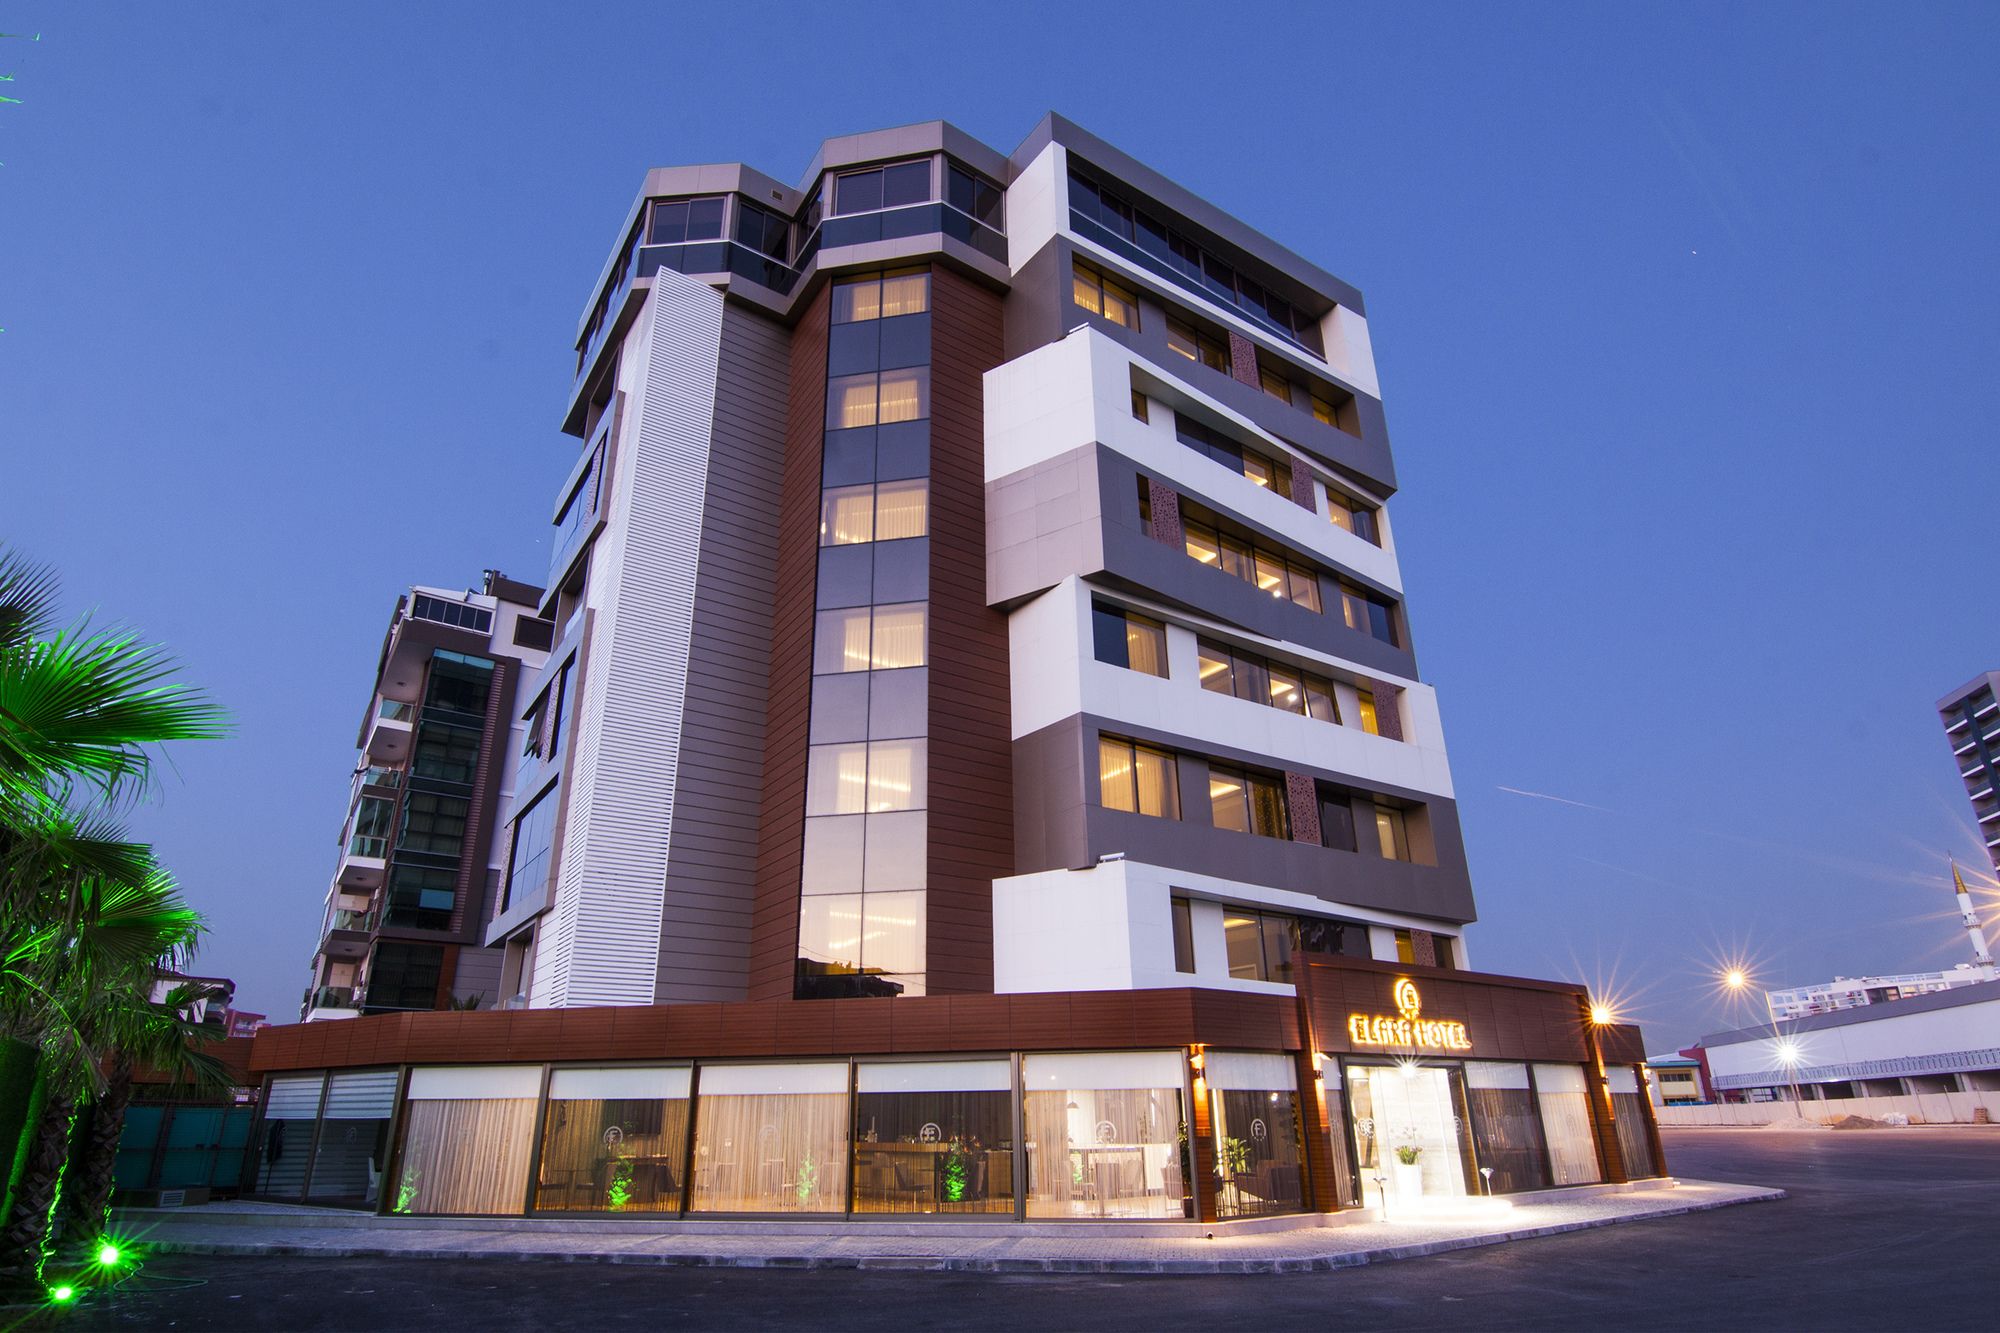 Elara Hotel